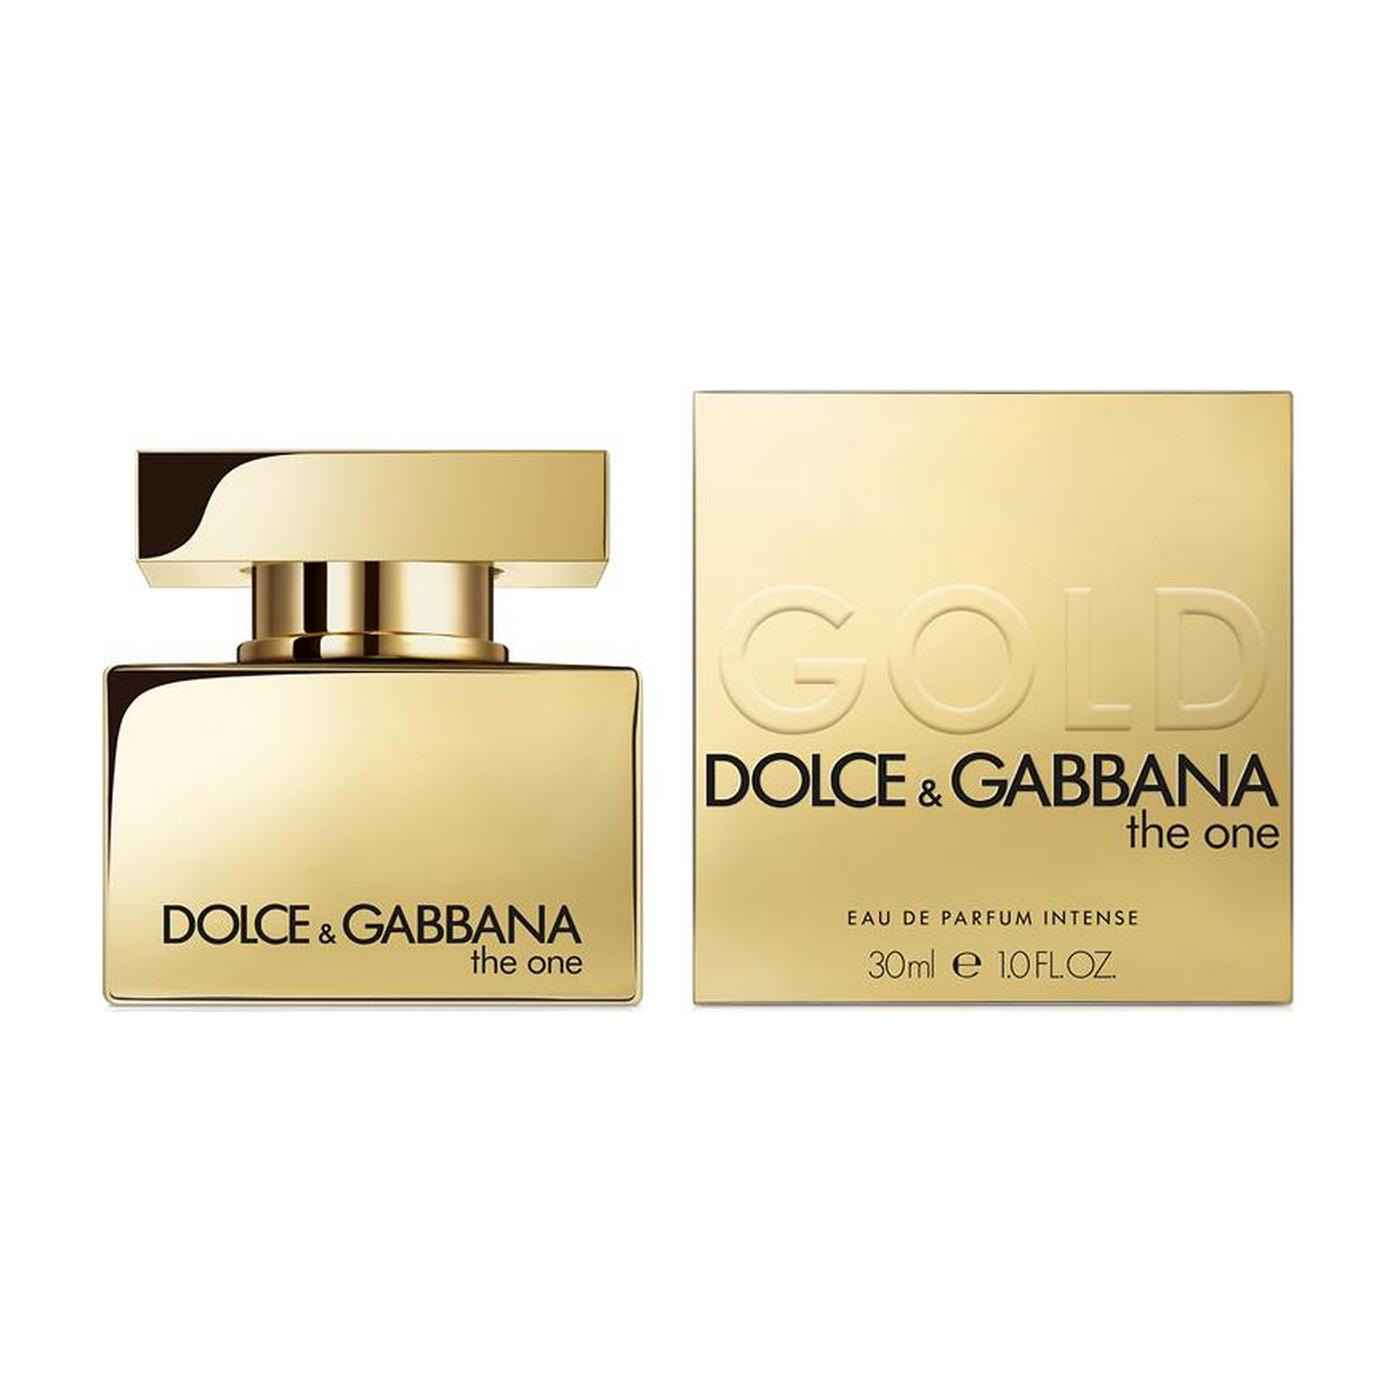 Купить дольче габбана ван. Dolce Gabbana the one Gold intense. Dolce Gabbana the one 75 ml. Дольче Габбана оне Голд Интенс. Dolce Gabbana the one Gold intense женские.